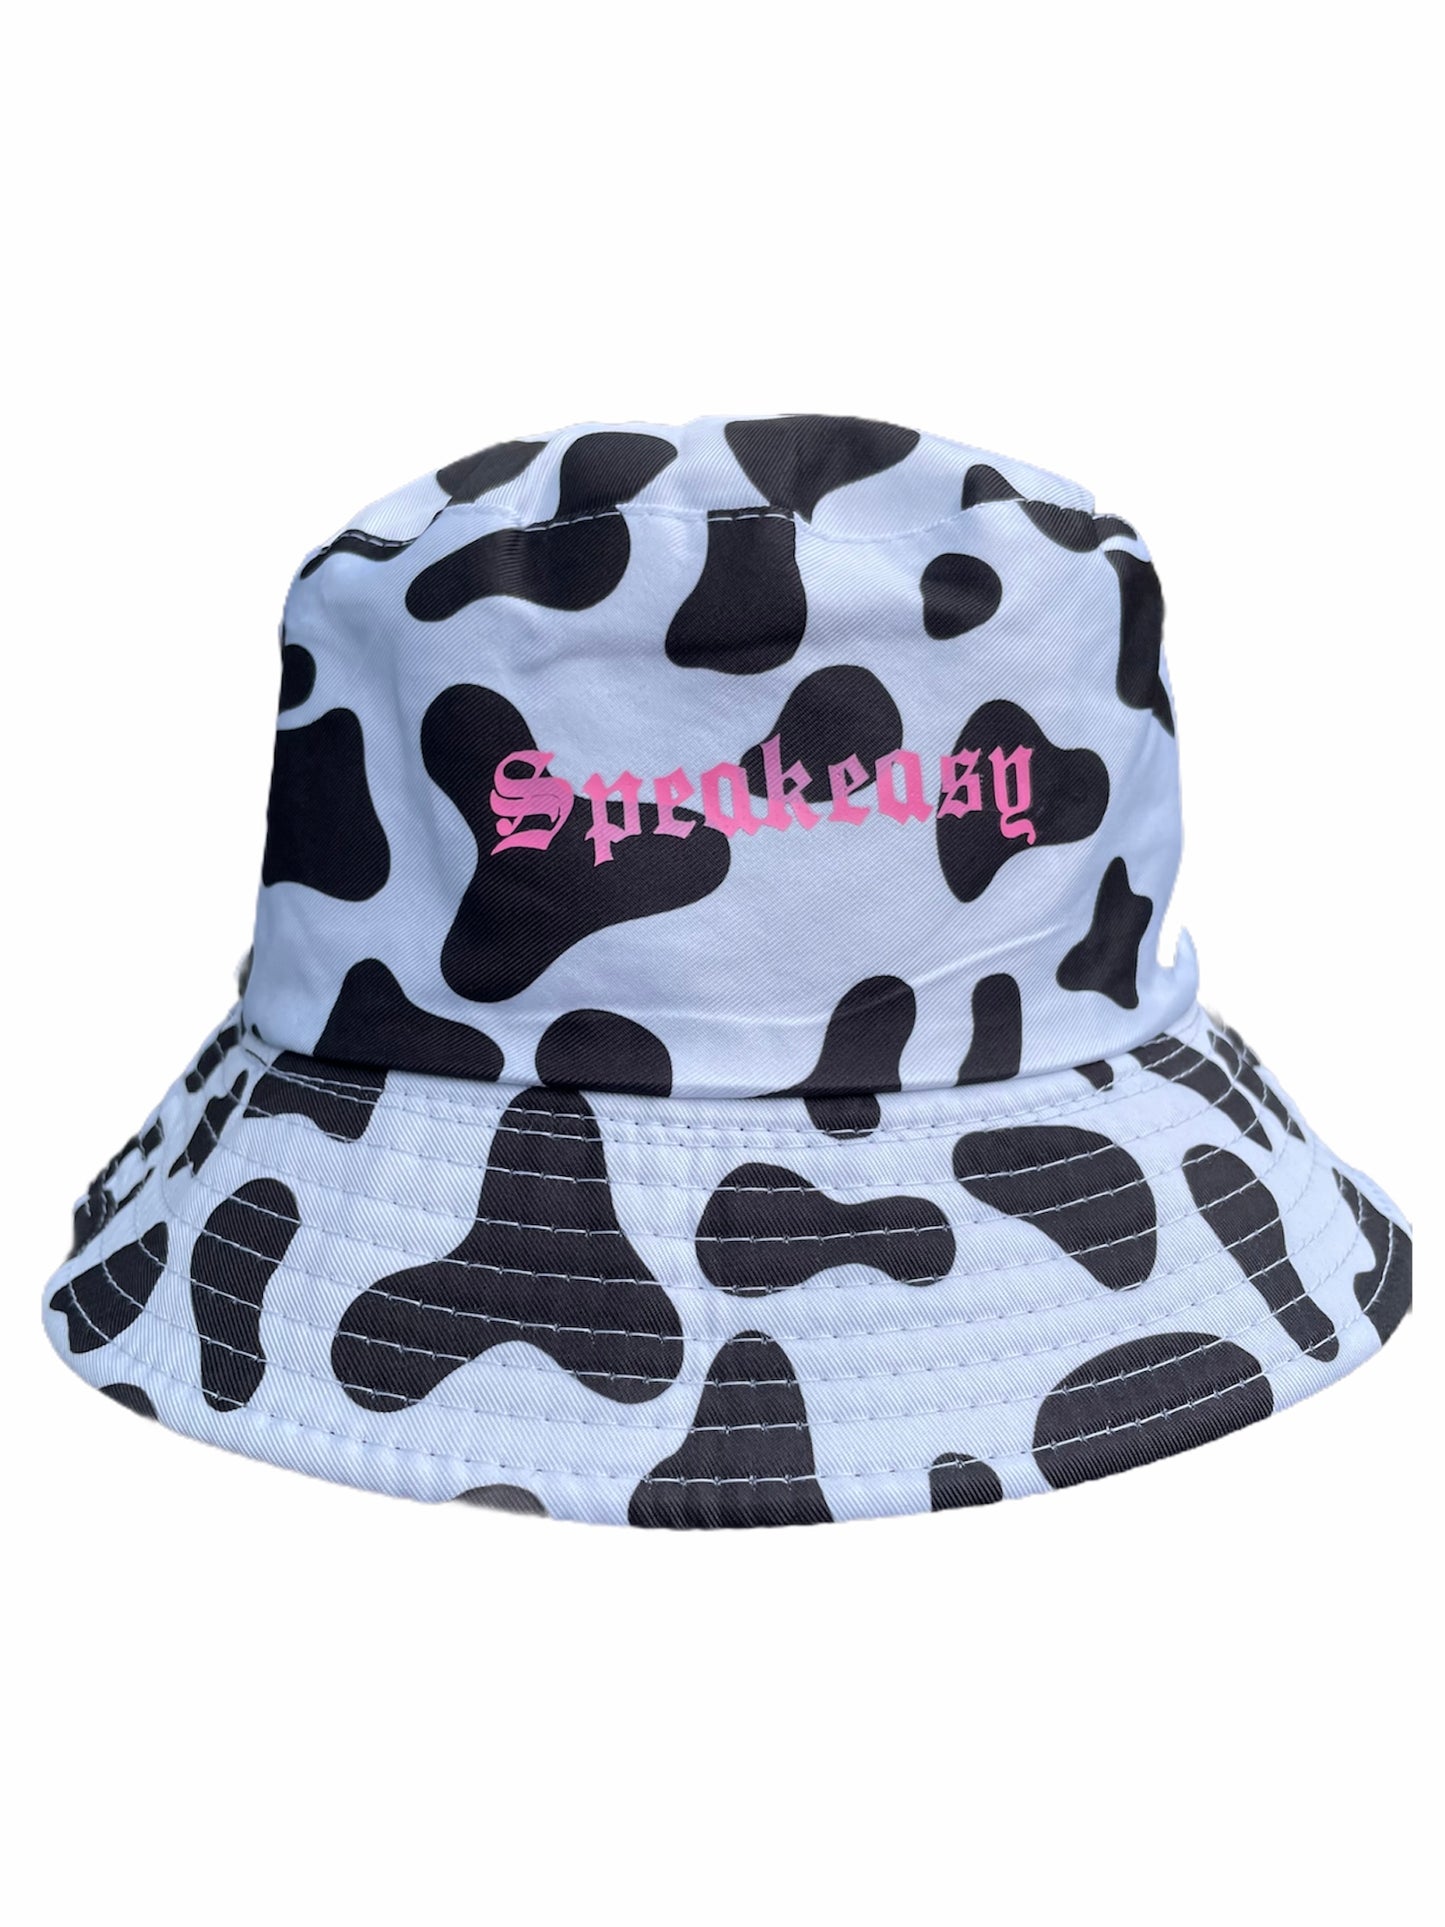 Cow Print Reversible Bucket Hat - Black & White